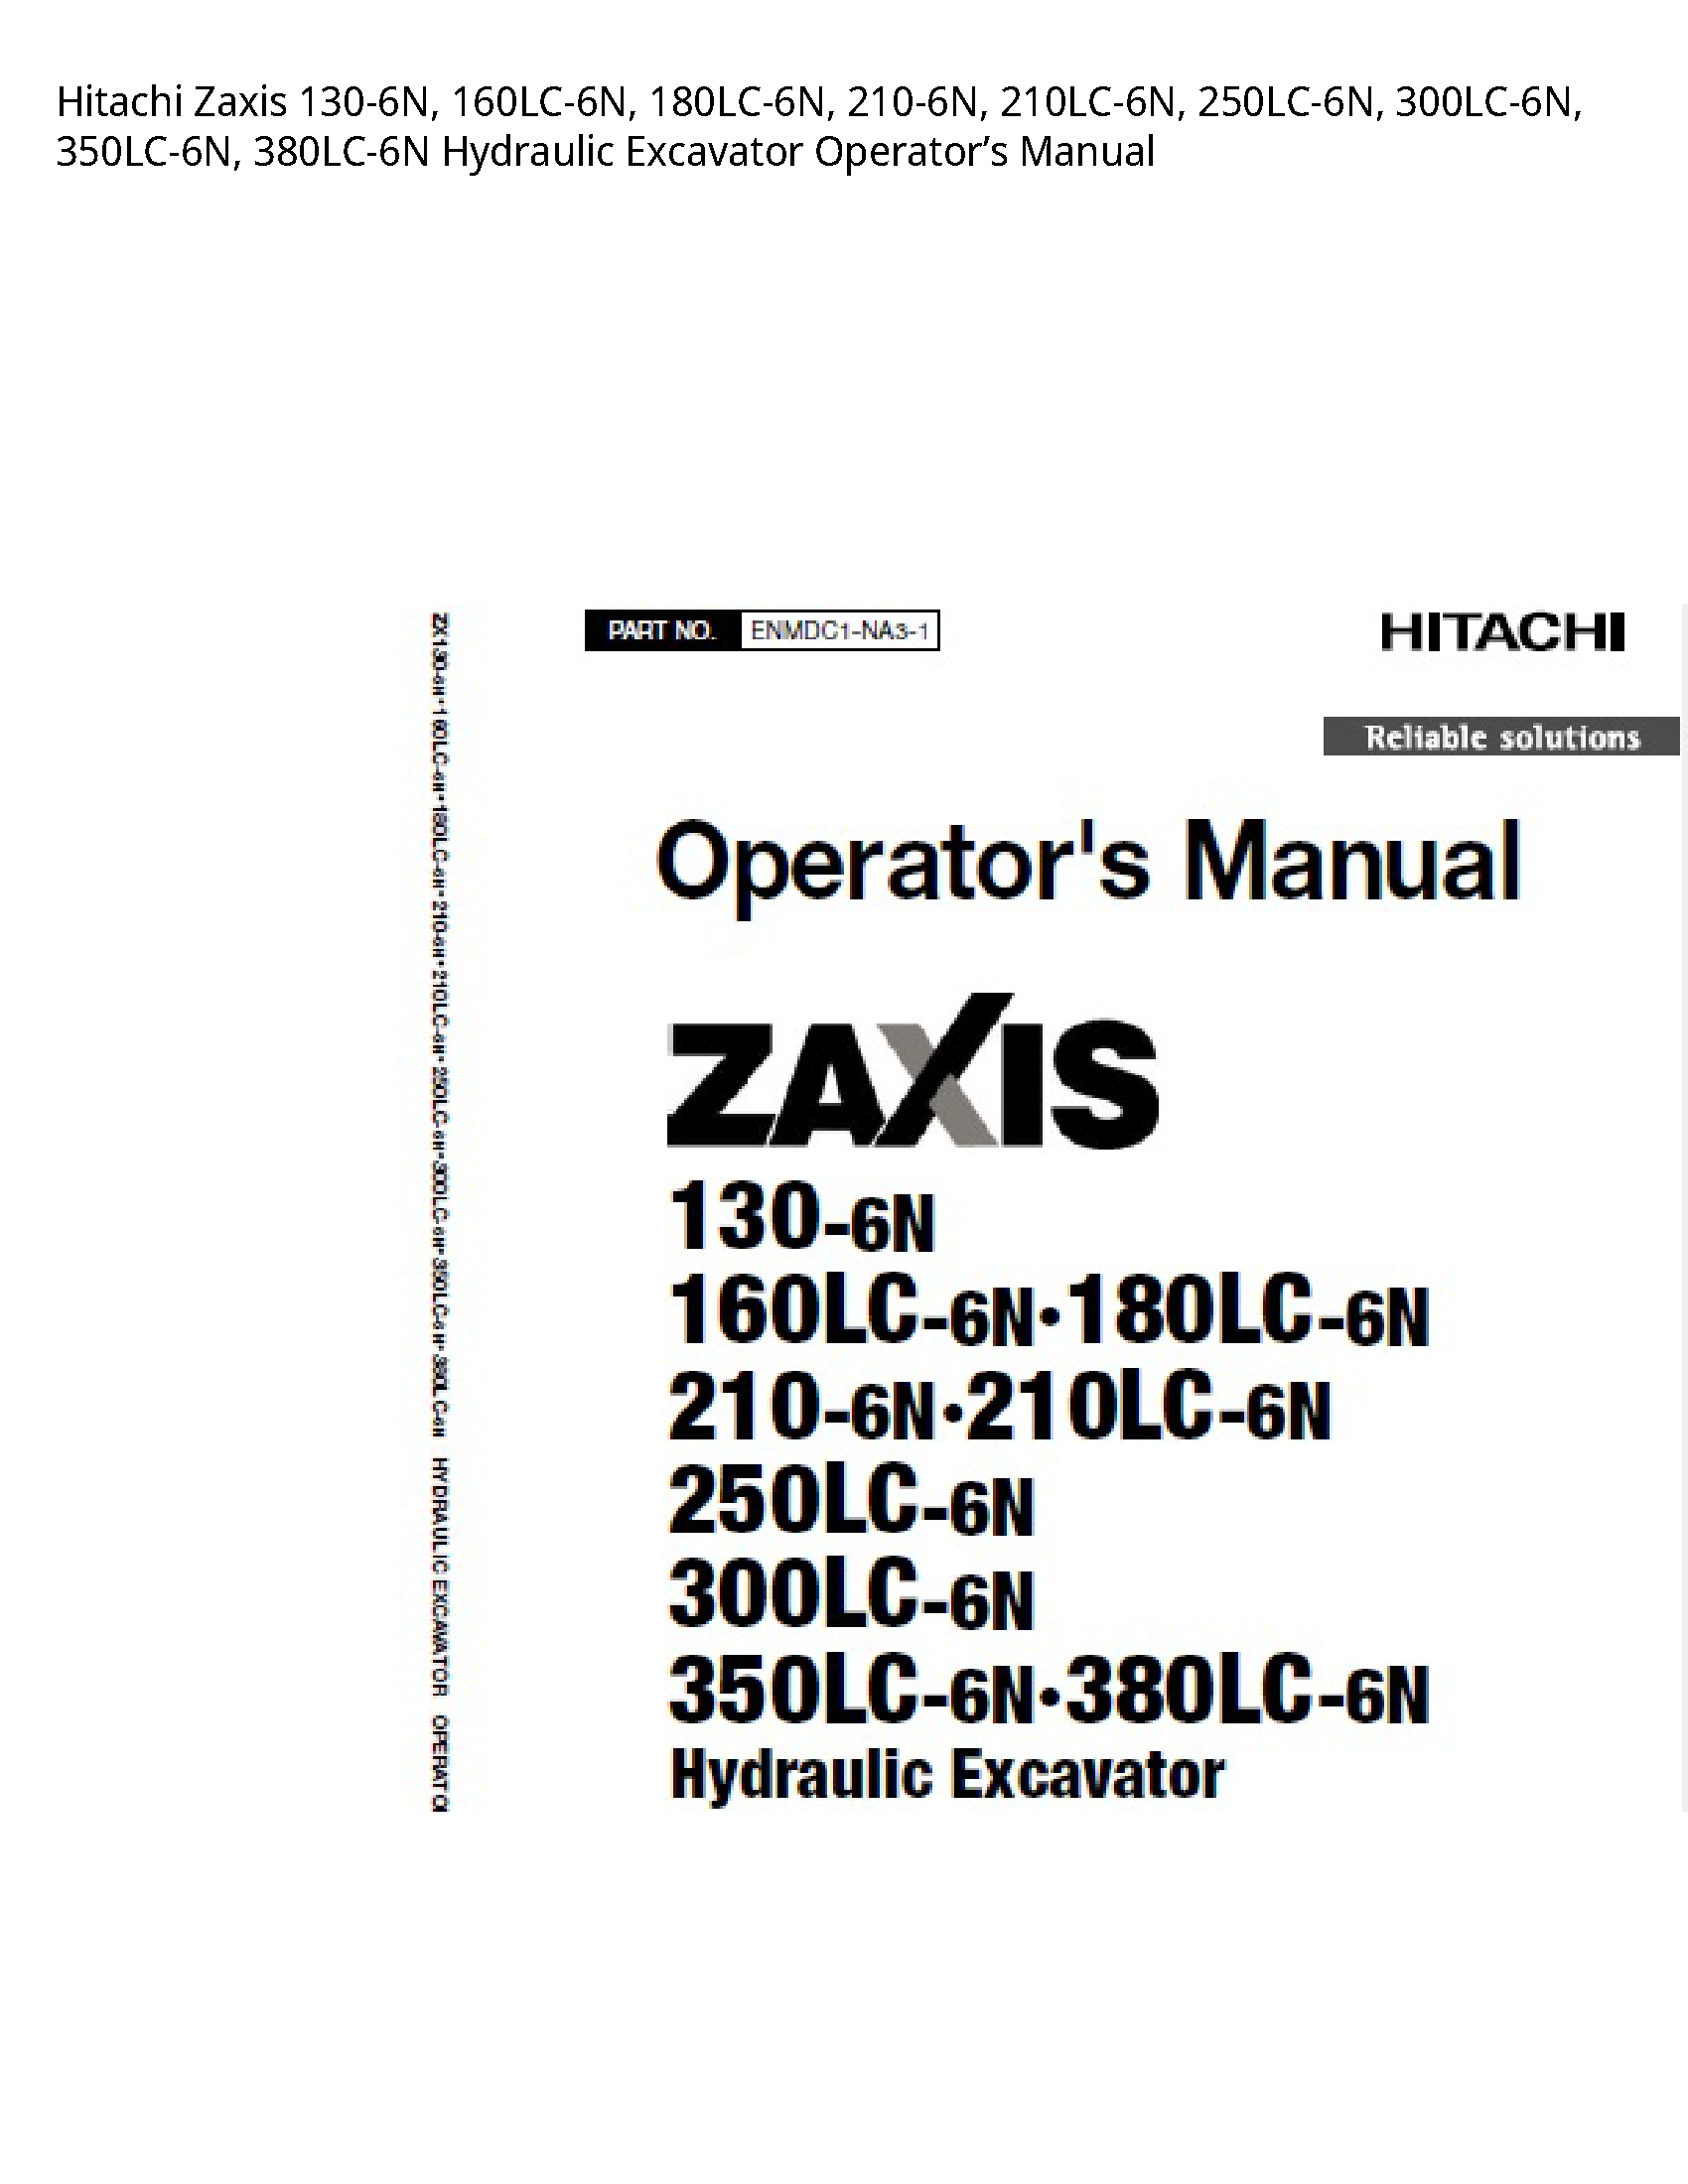 Hitachi 130-6N Zaxis Hydraulic Excavator Operator’s manual